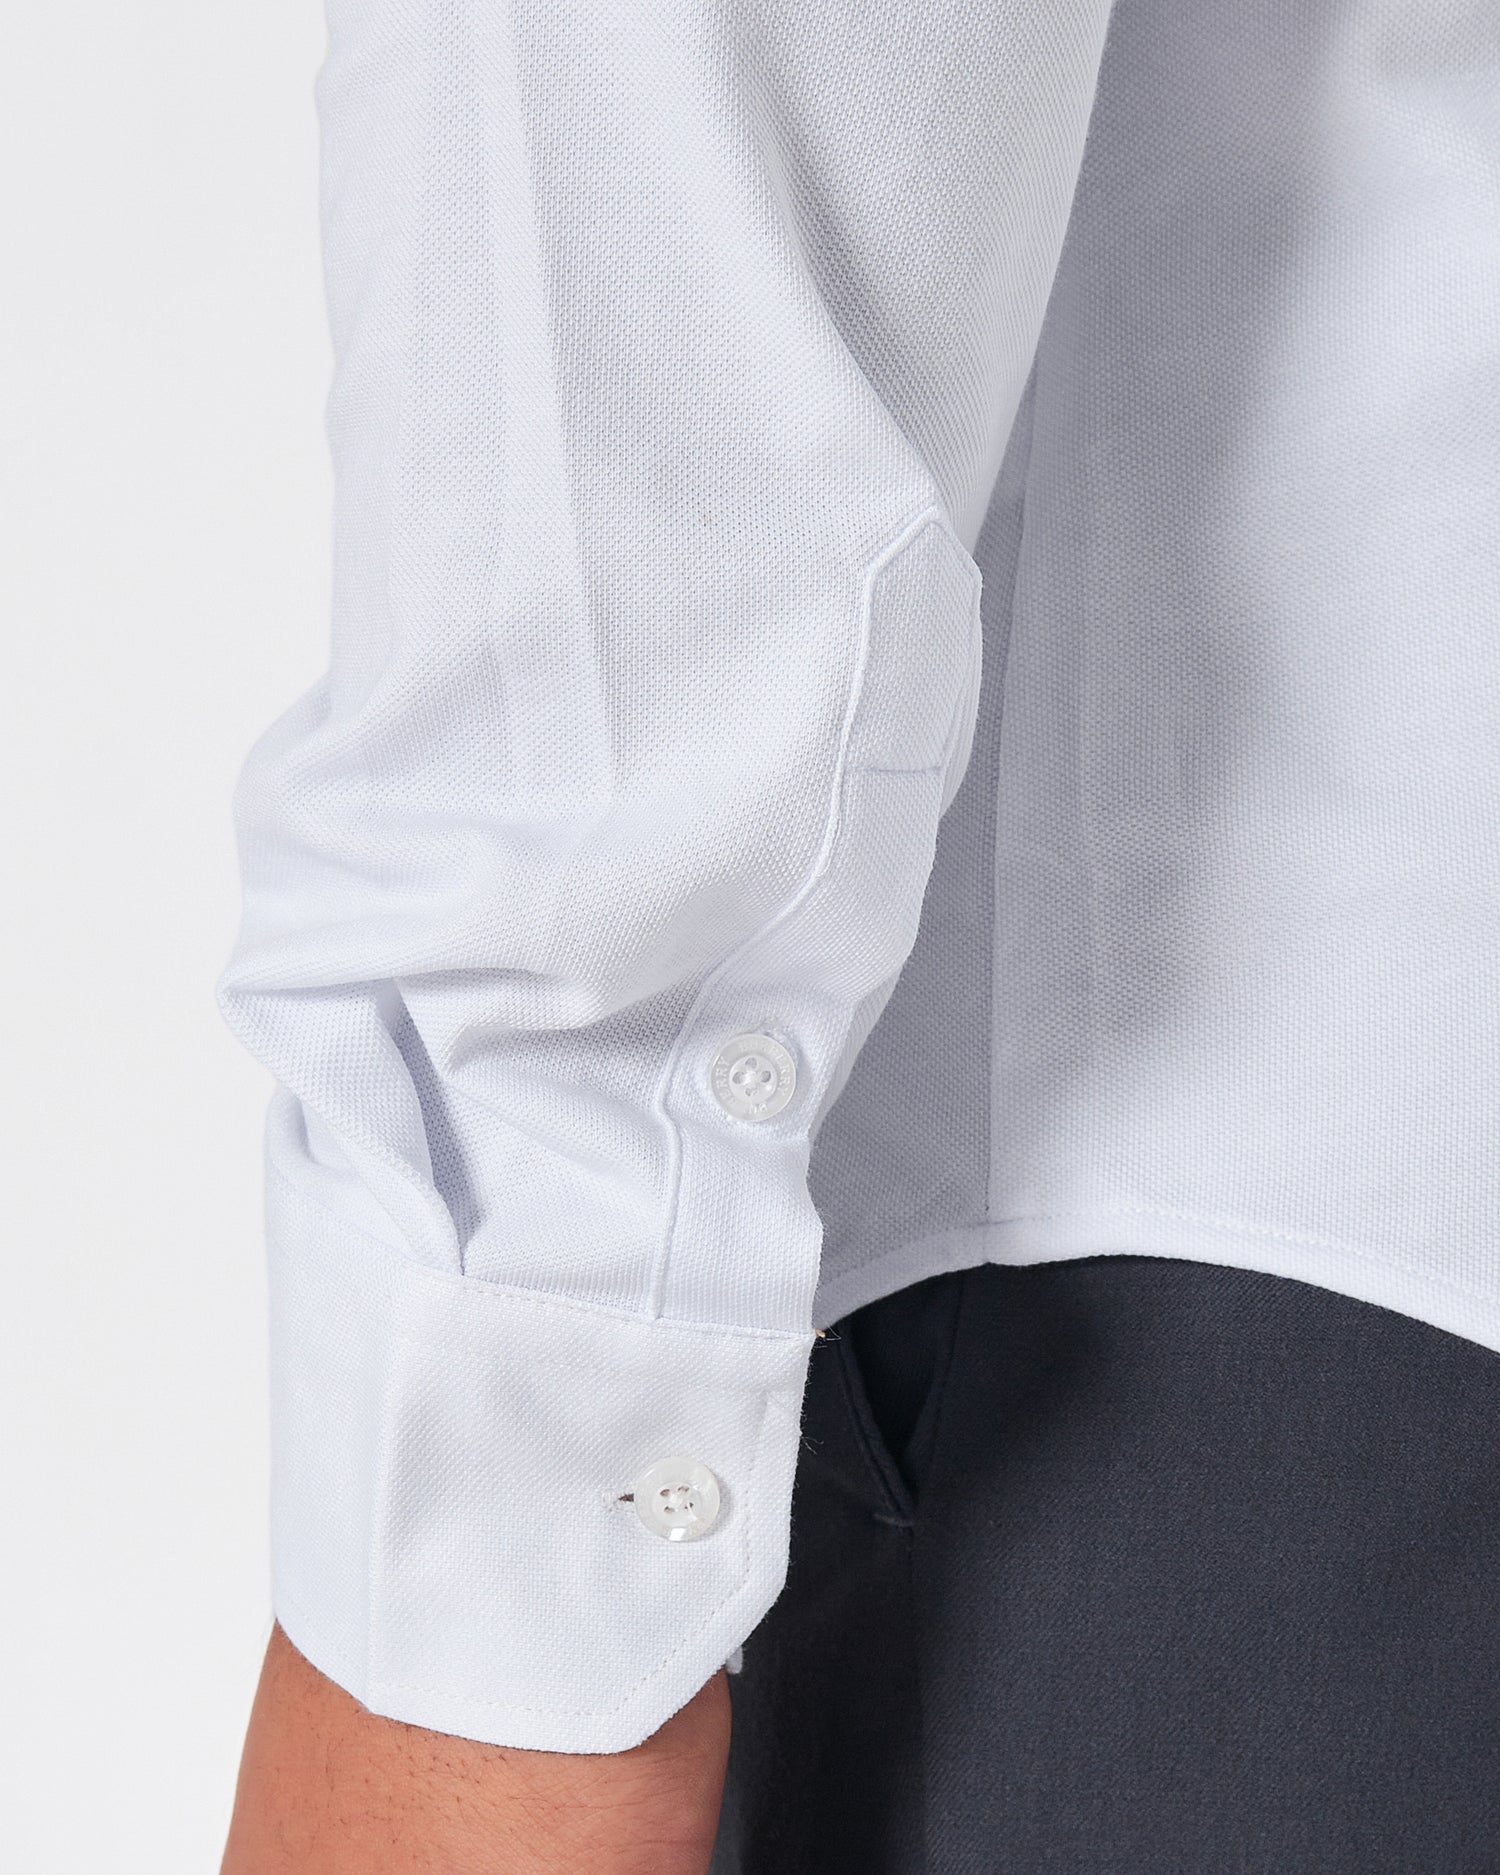 BUR Logo Embroidered Men White Shirts Long Sleeve 25.90